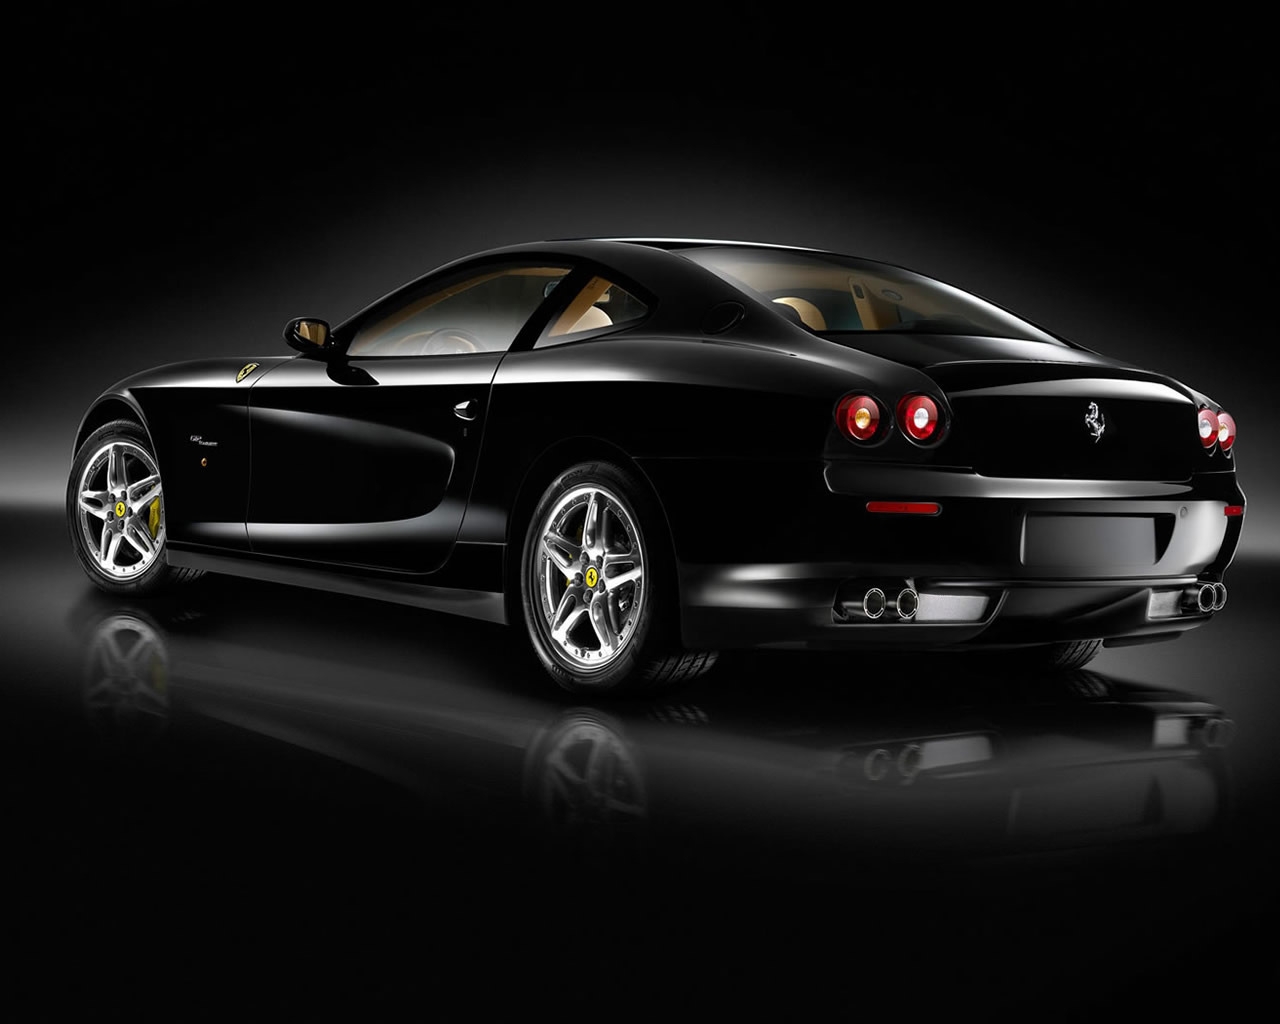 Superb Black Ferrari for 1280 x 1024 resolution